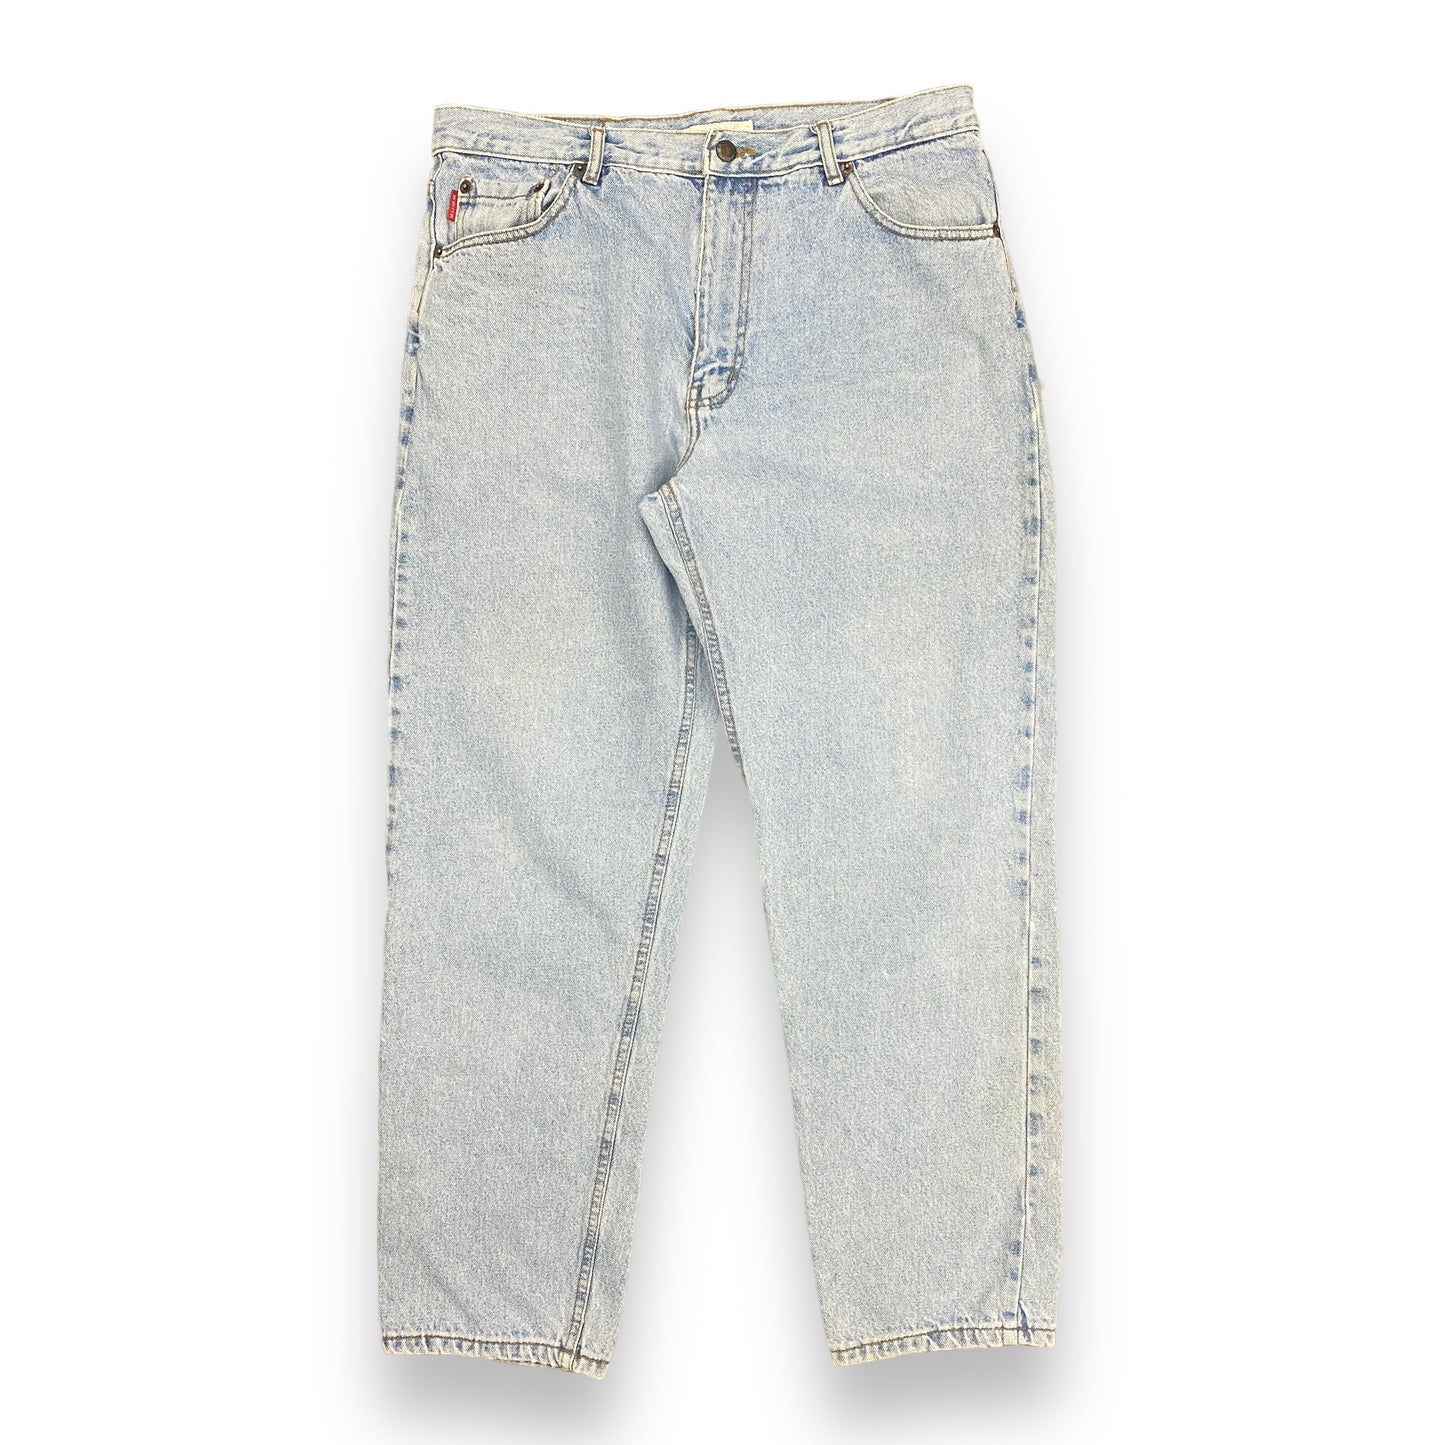 1990s Bugle Boys Light Wash Jeans - 33"x29"